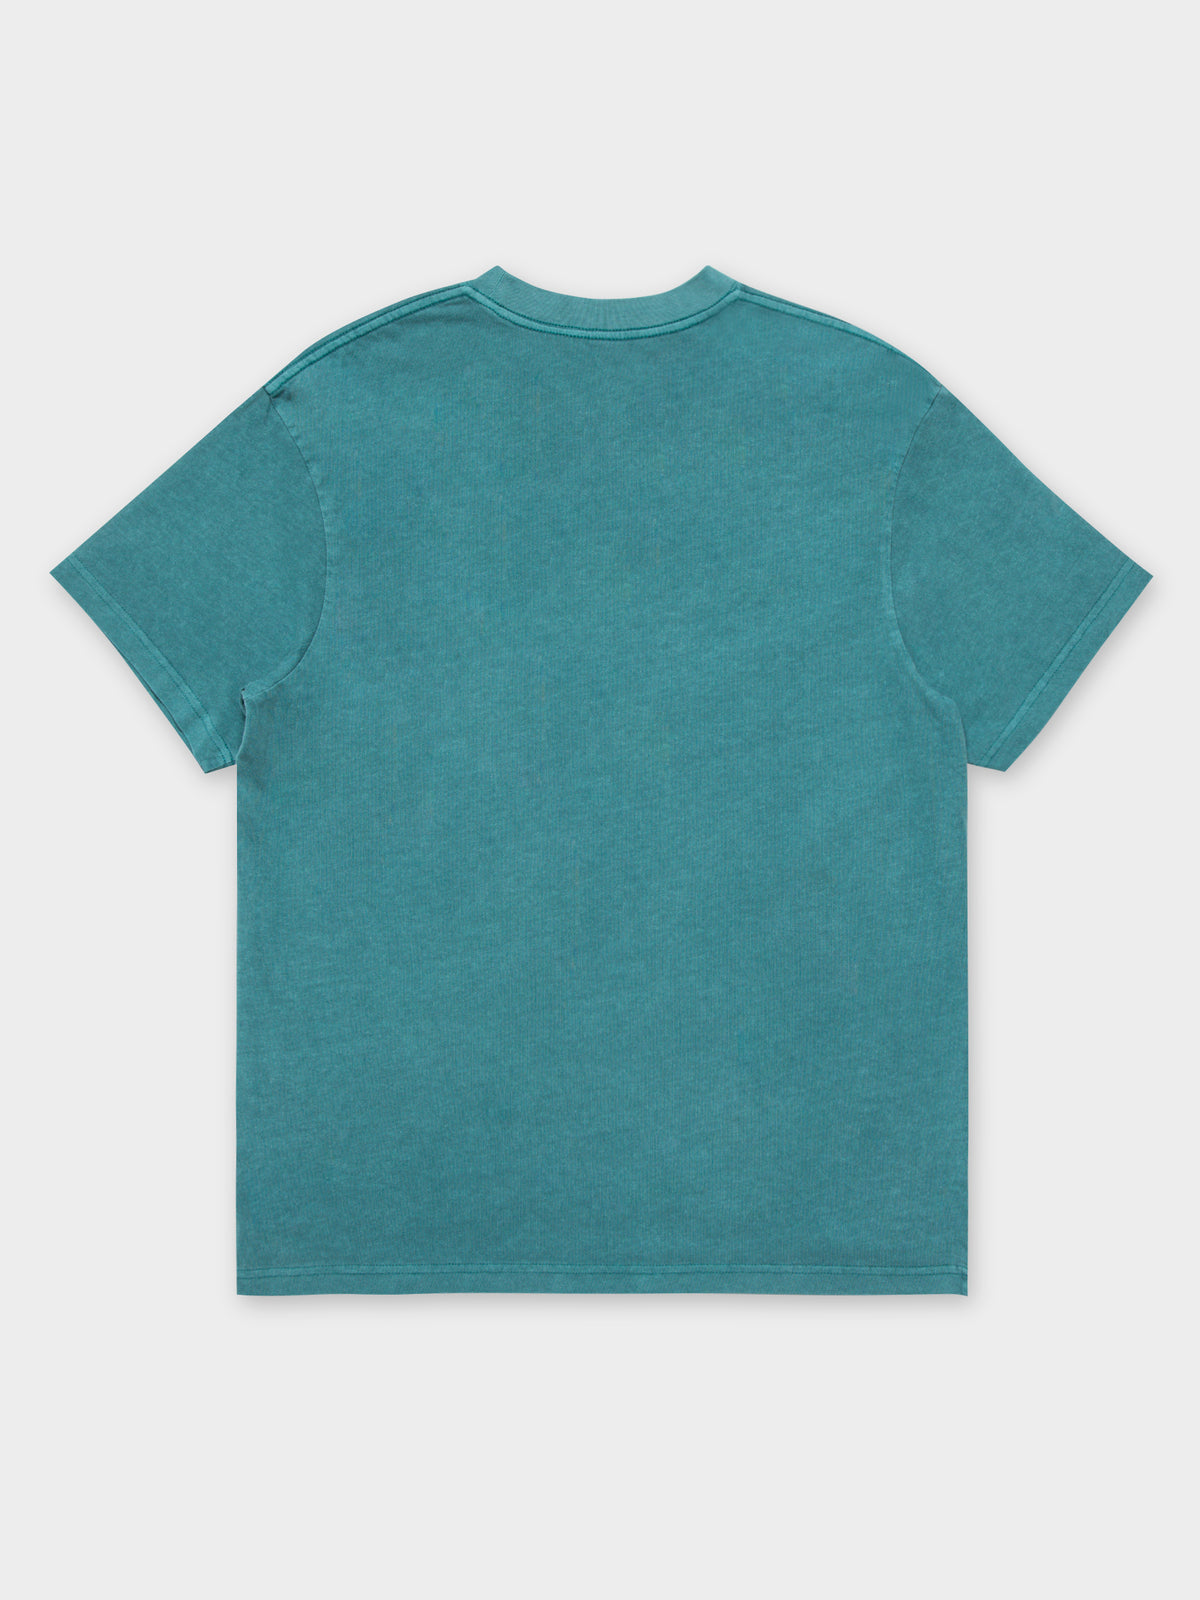 Vintage Scribble Charlotte Hornets T-Shirt in Blue